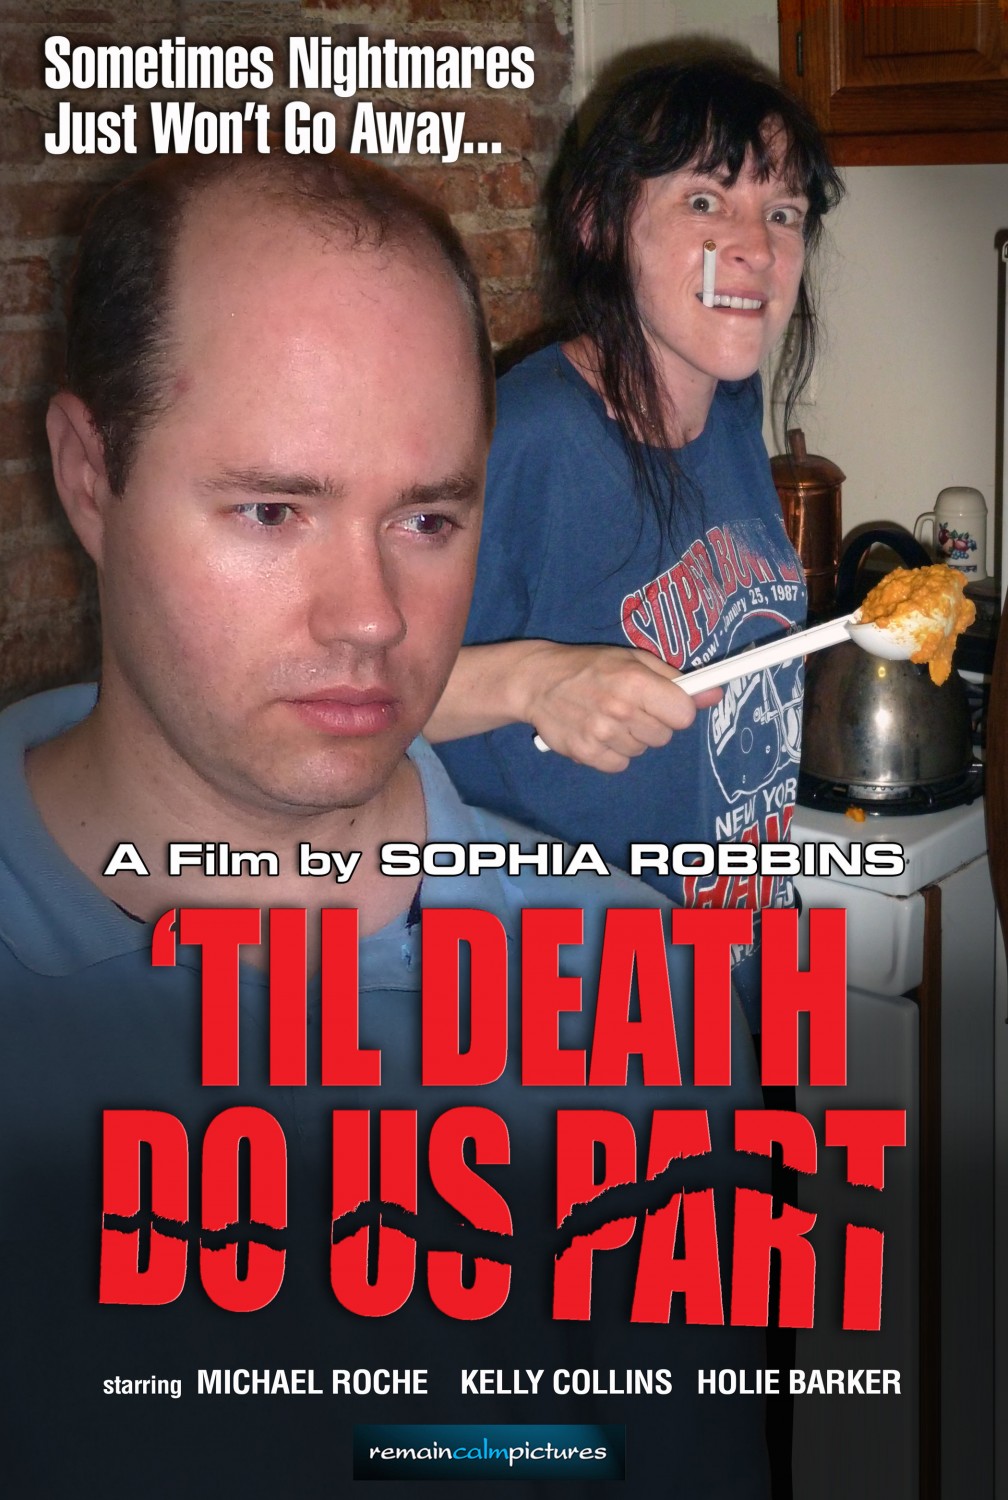 Extra Large Movie Poster Image for 'Til Death Do Us Part